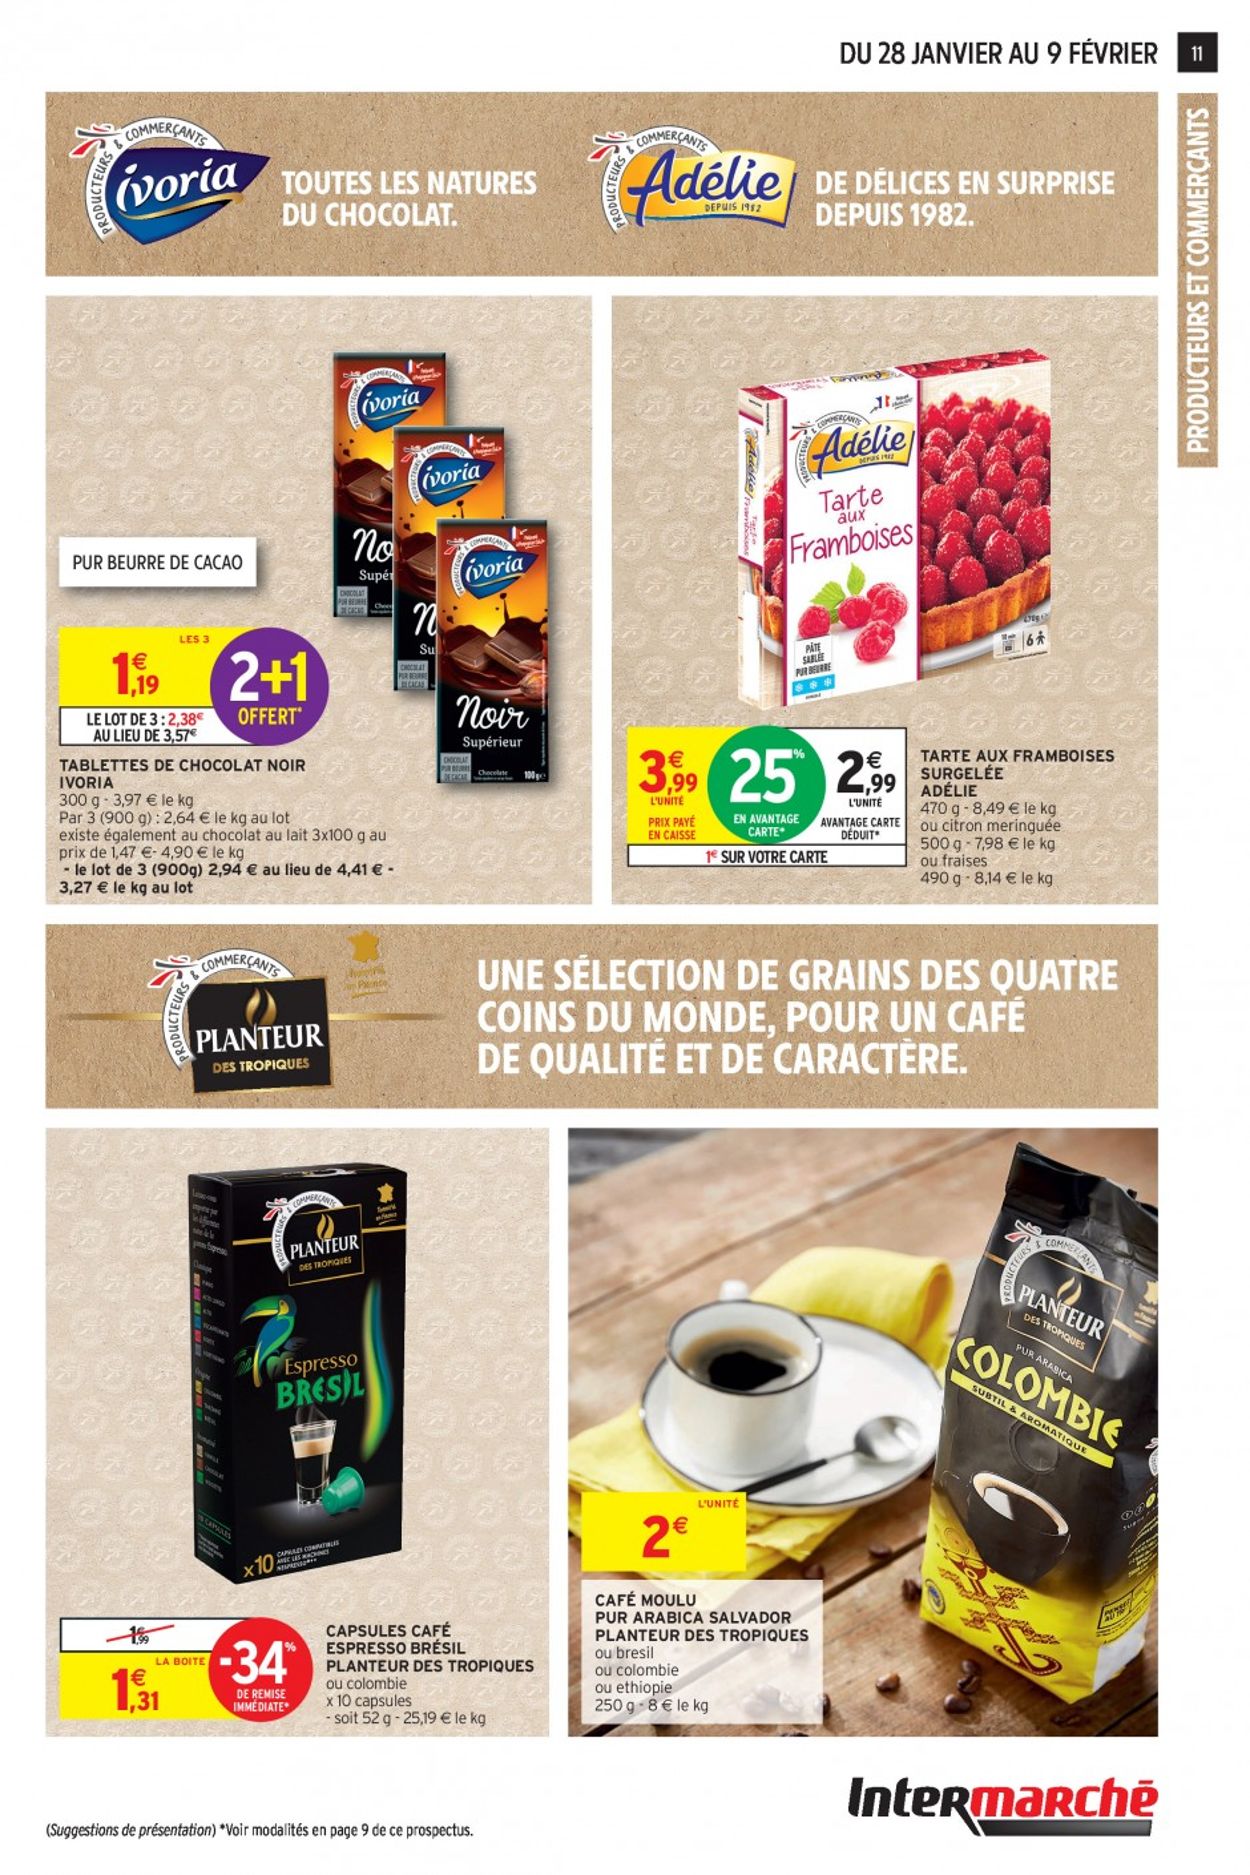 Intermarché Catalogue - 28.01-09.02.2020 (Page 11)